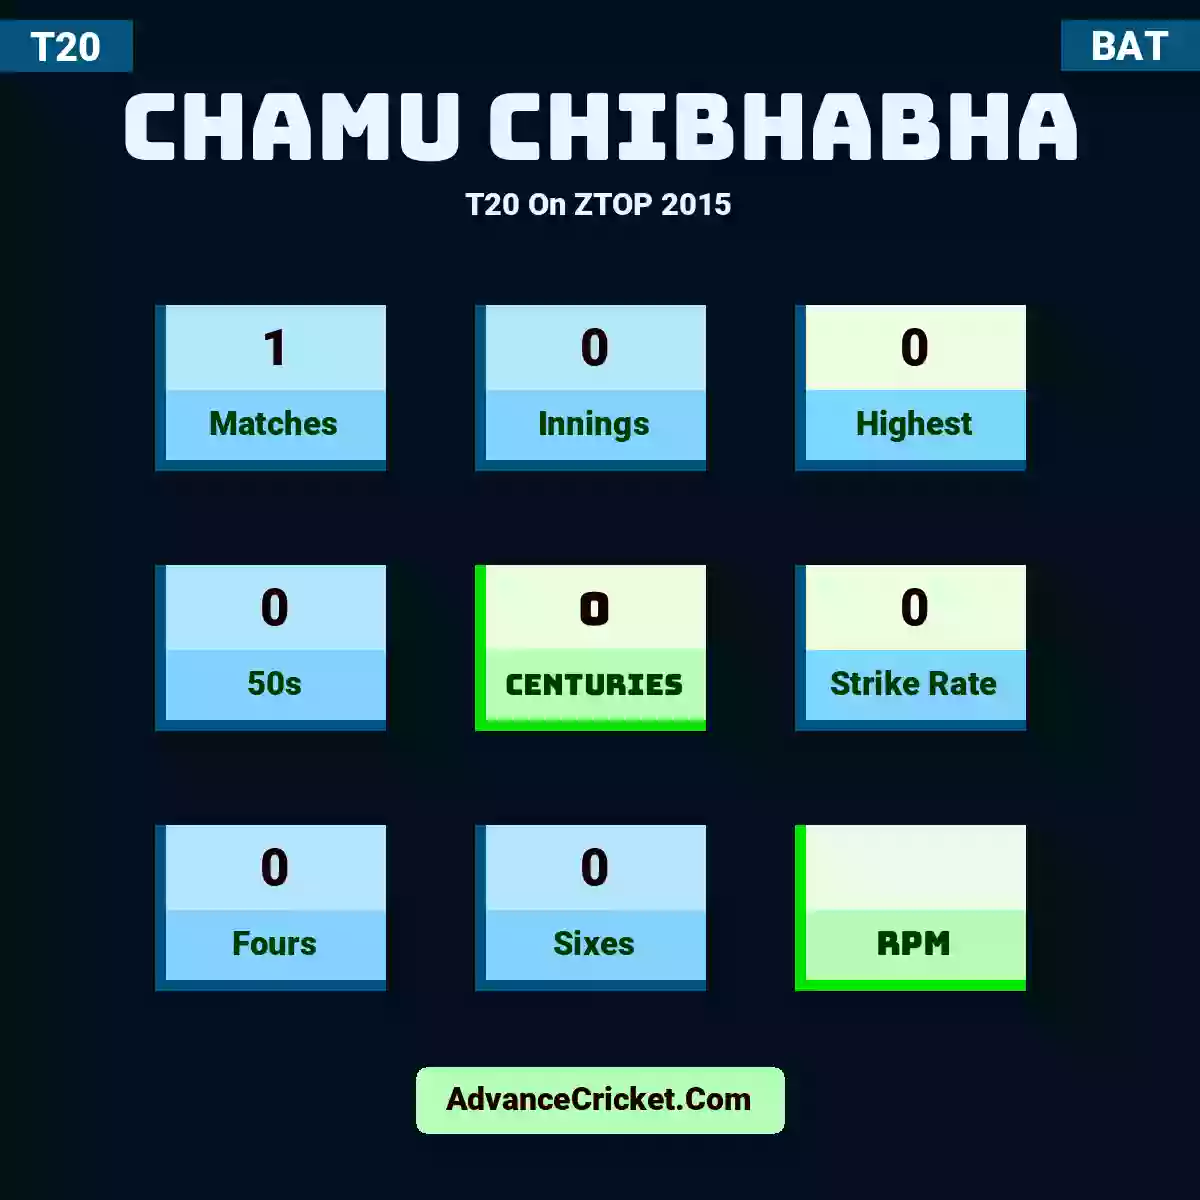 Chamu Chibhabha T20  On ZTOP 2015, Chamu Chibhabha played 1 matches, scored 0 runs as highest, 0 half-centuries, and 0 centuries, with a strike rate of 0. C.Chibhabha hit 0 fours and 0 sixes.